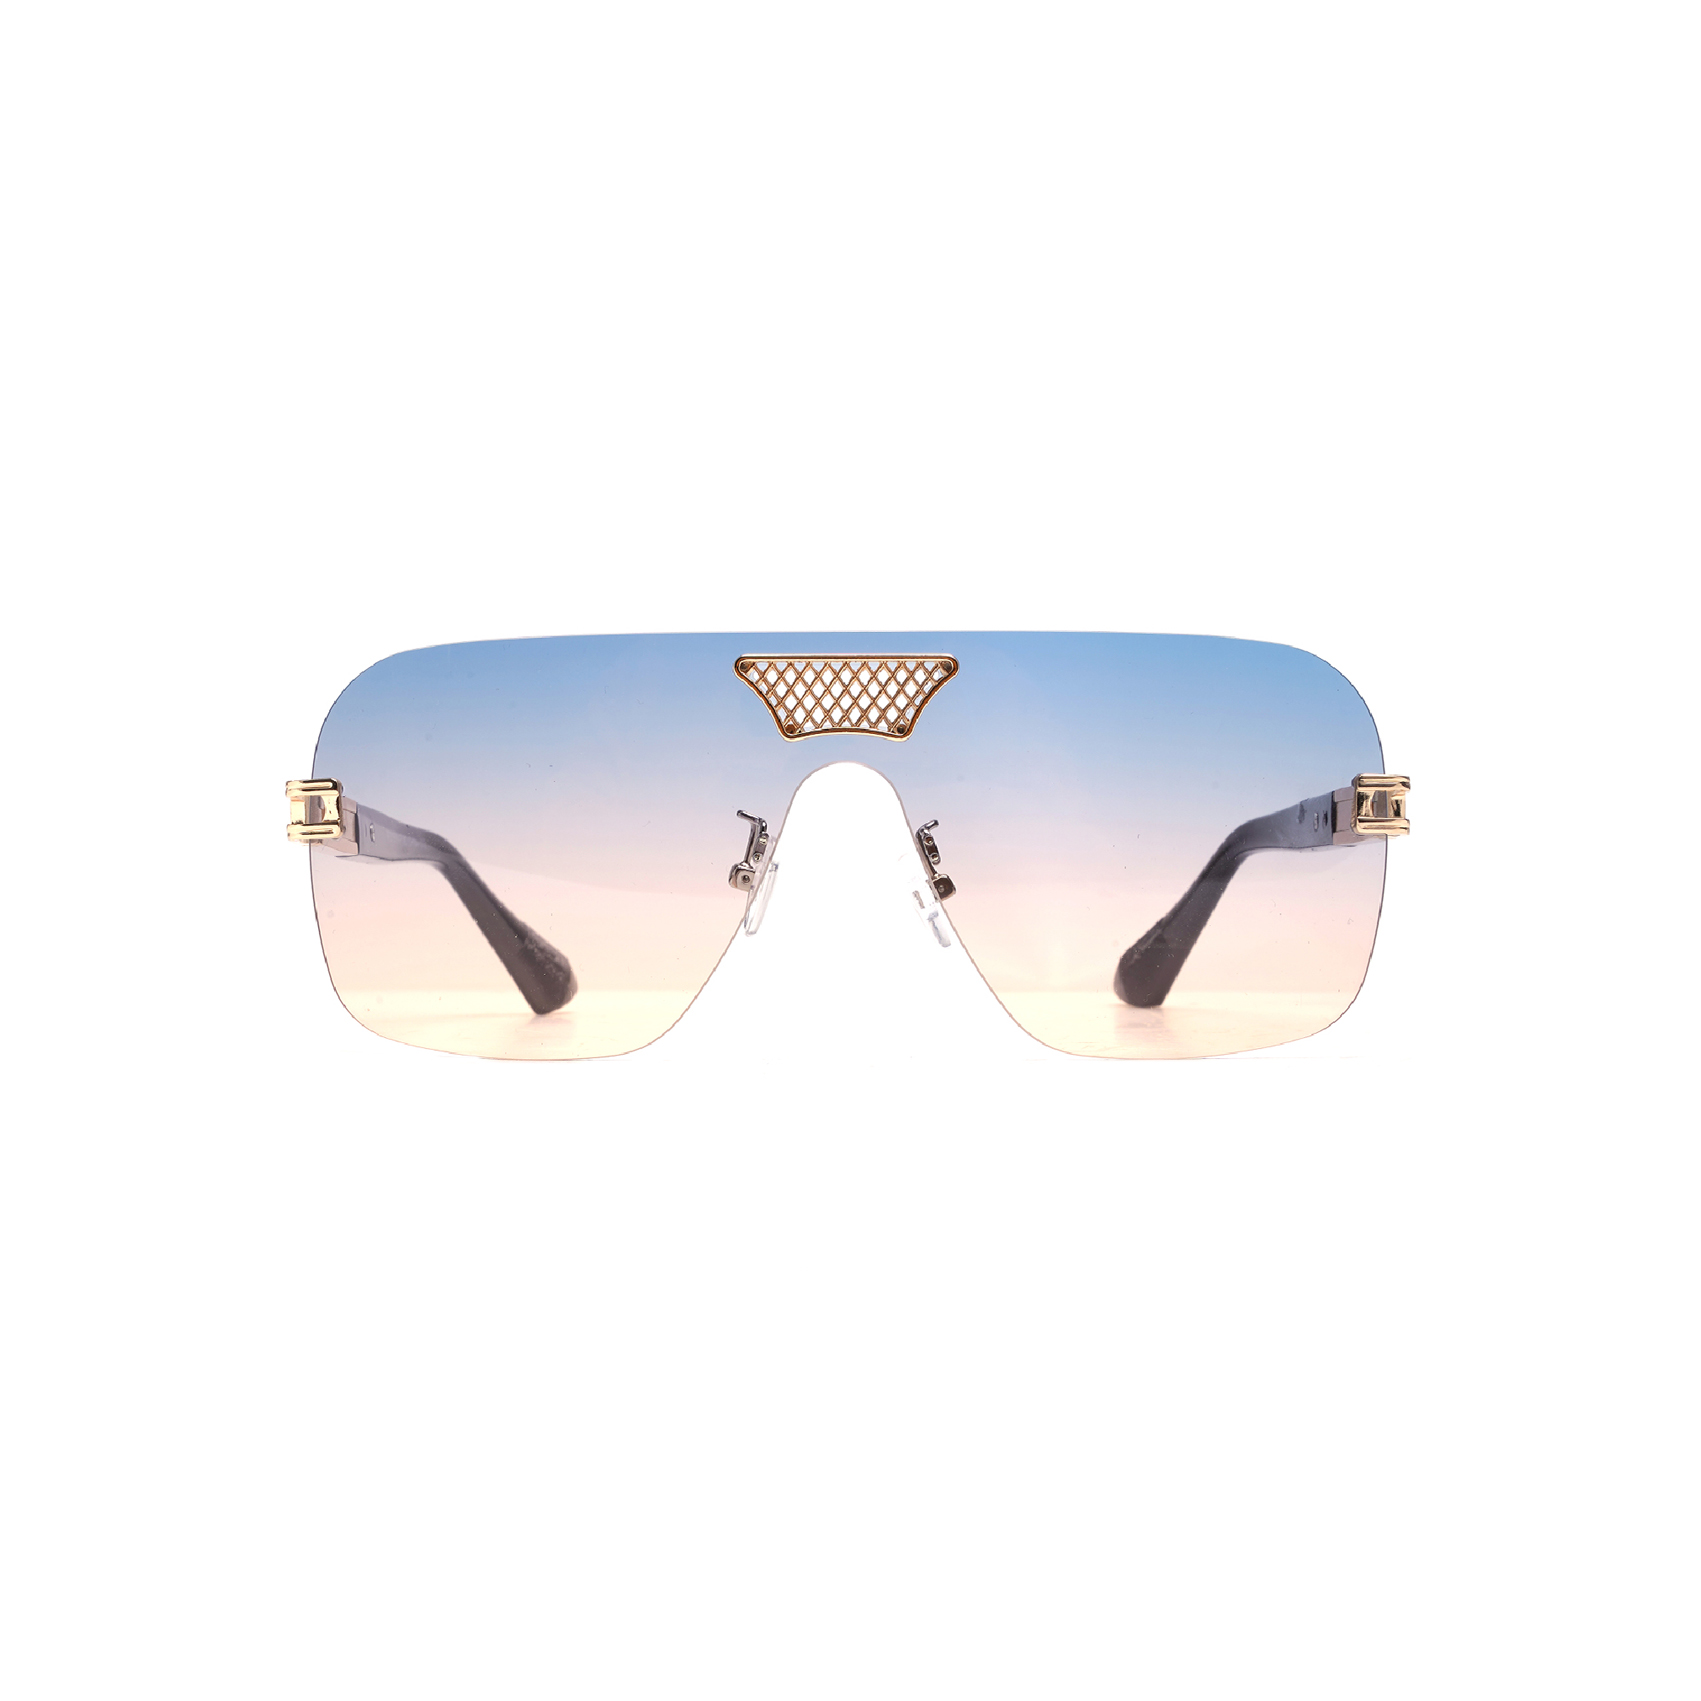 Flashy Portable Sunglasses Frameless Design Fashion Sunglasses Manufacturers